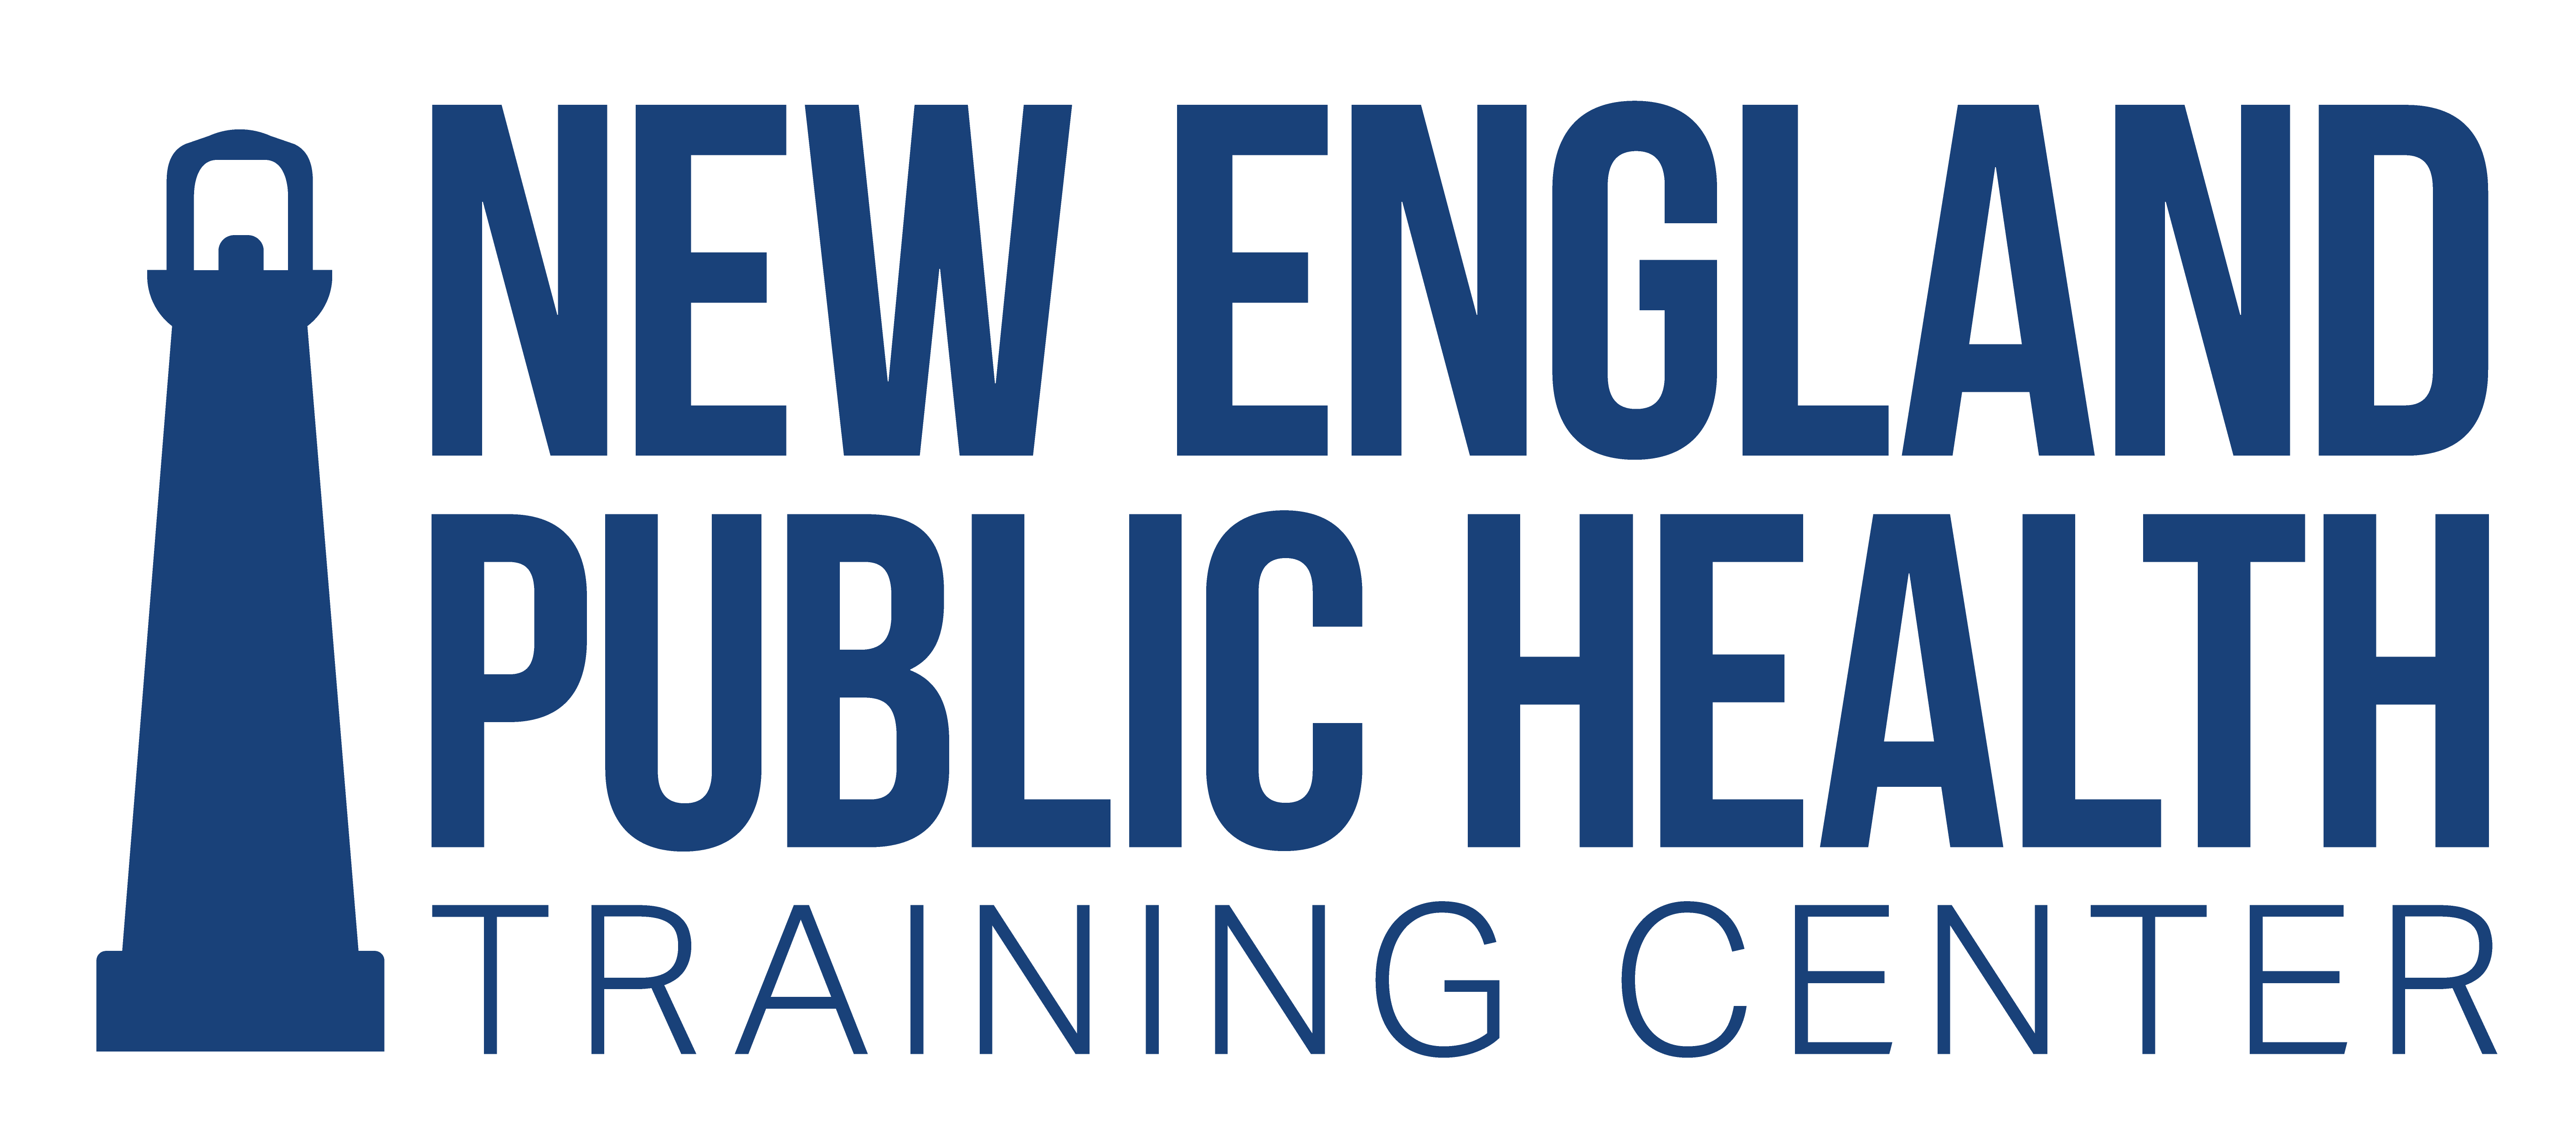 CDC - 10 Essential Public Health Services - Public Health Infrastructure  Center